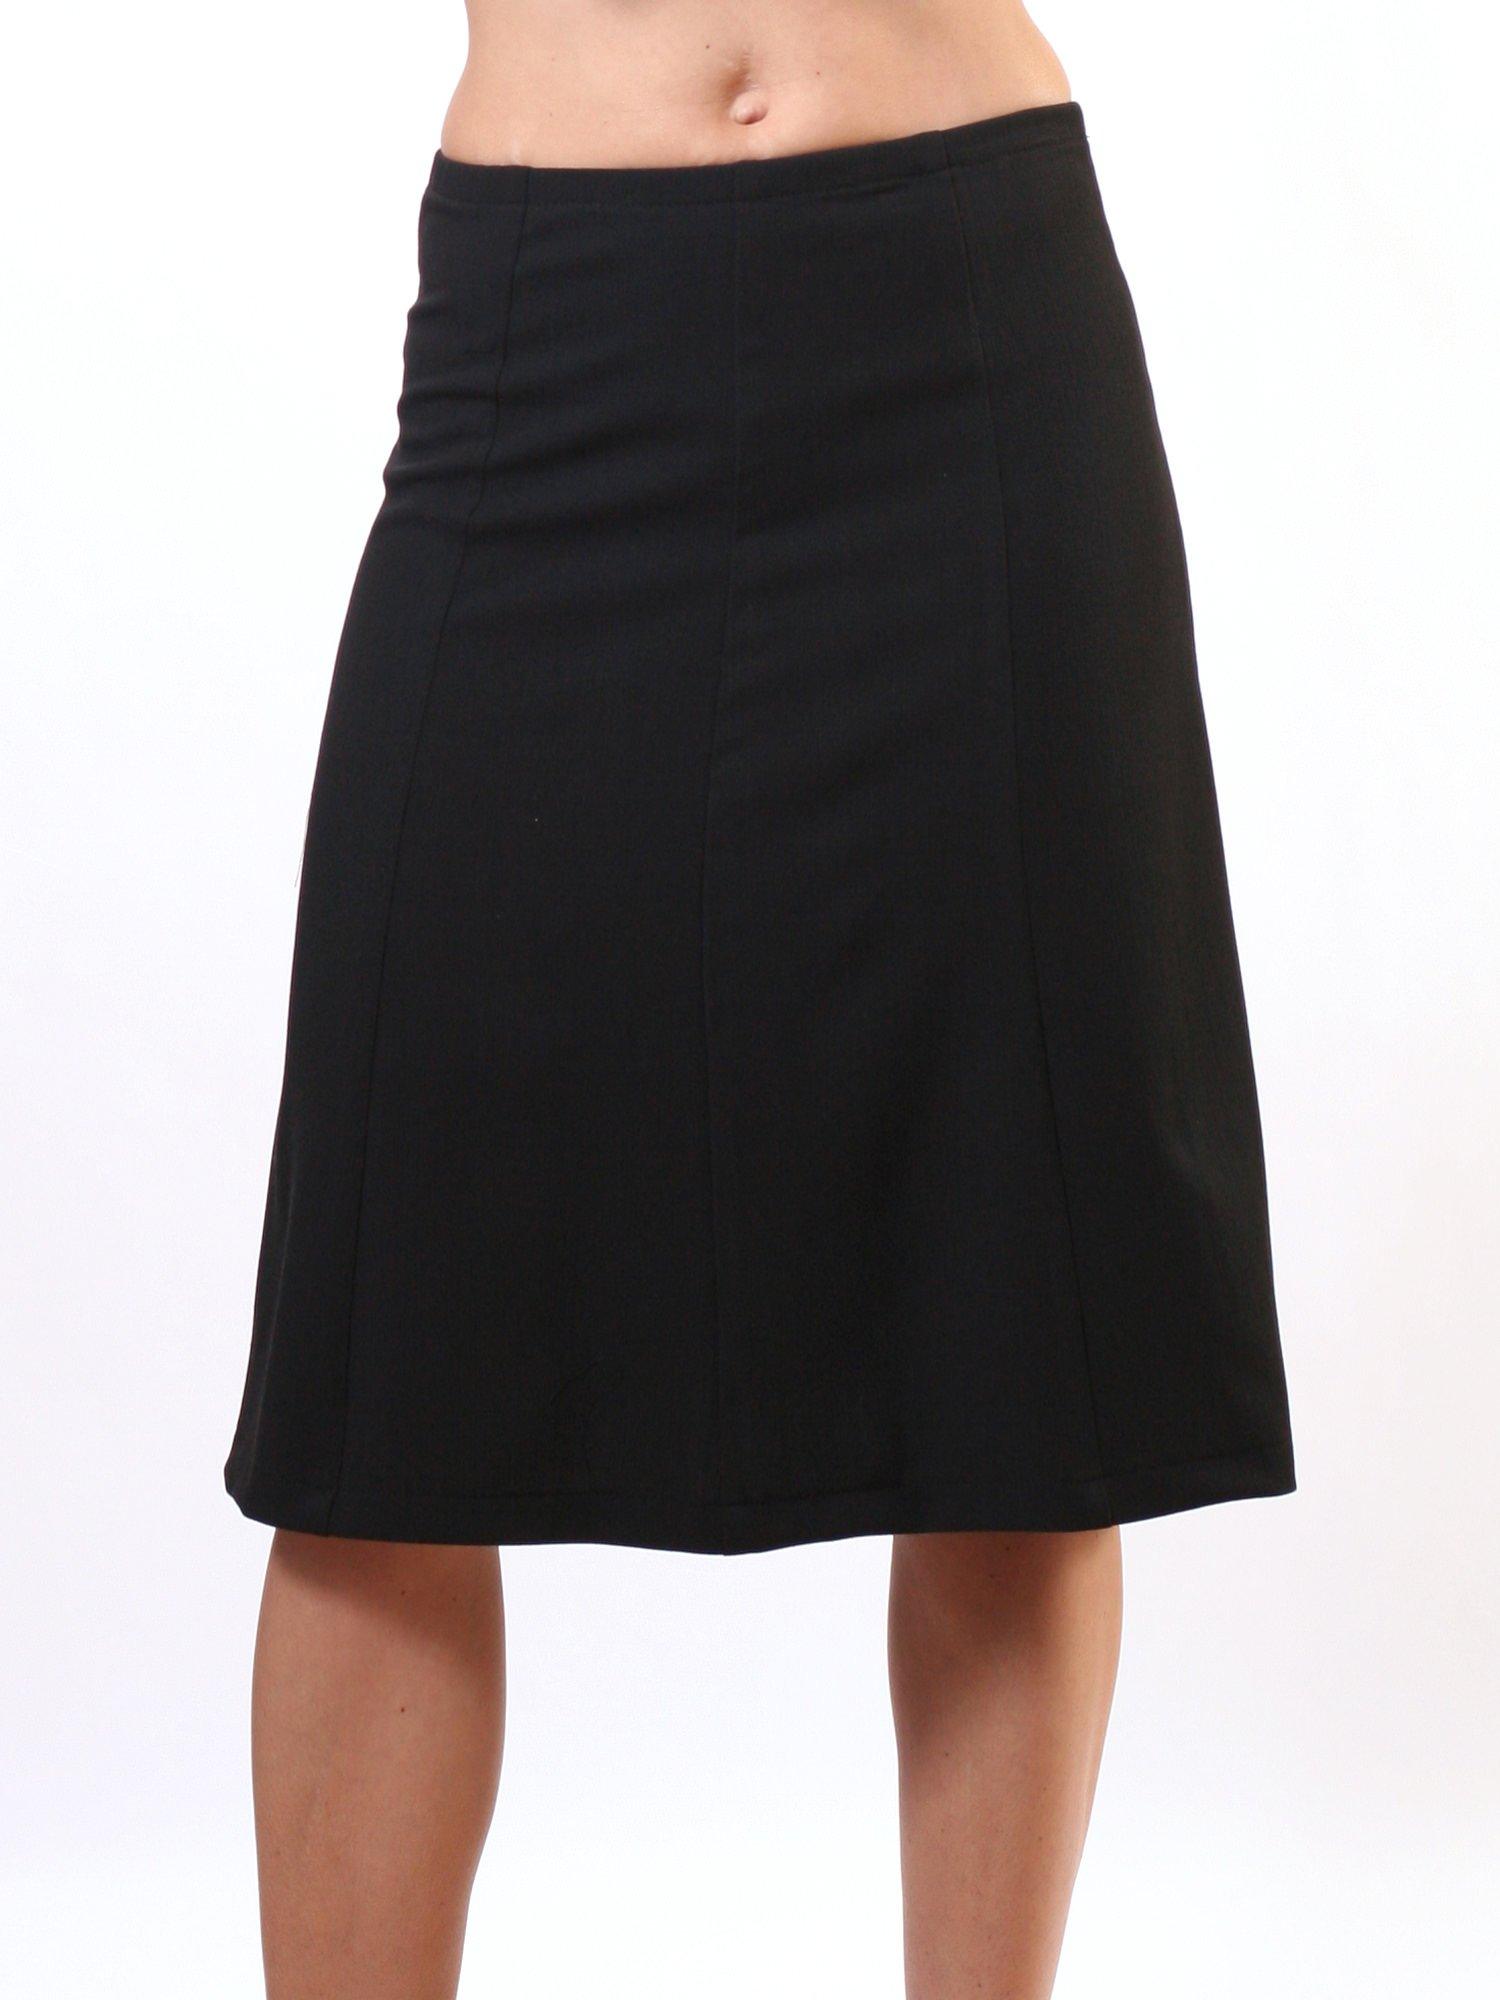 Jalie 2681 - Knee-Length A-Line Skirt